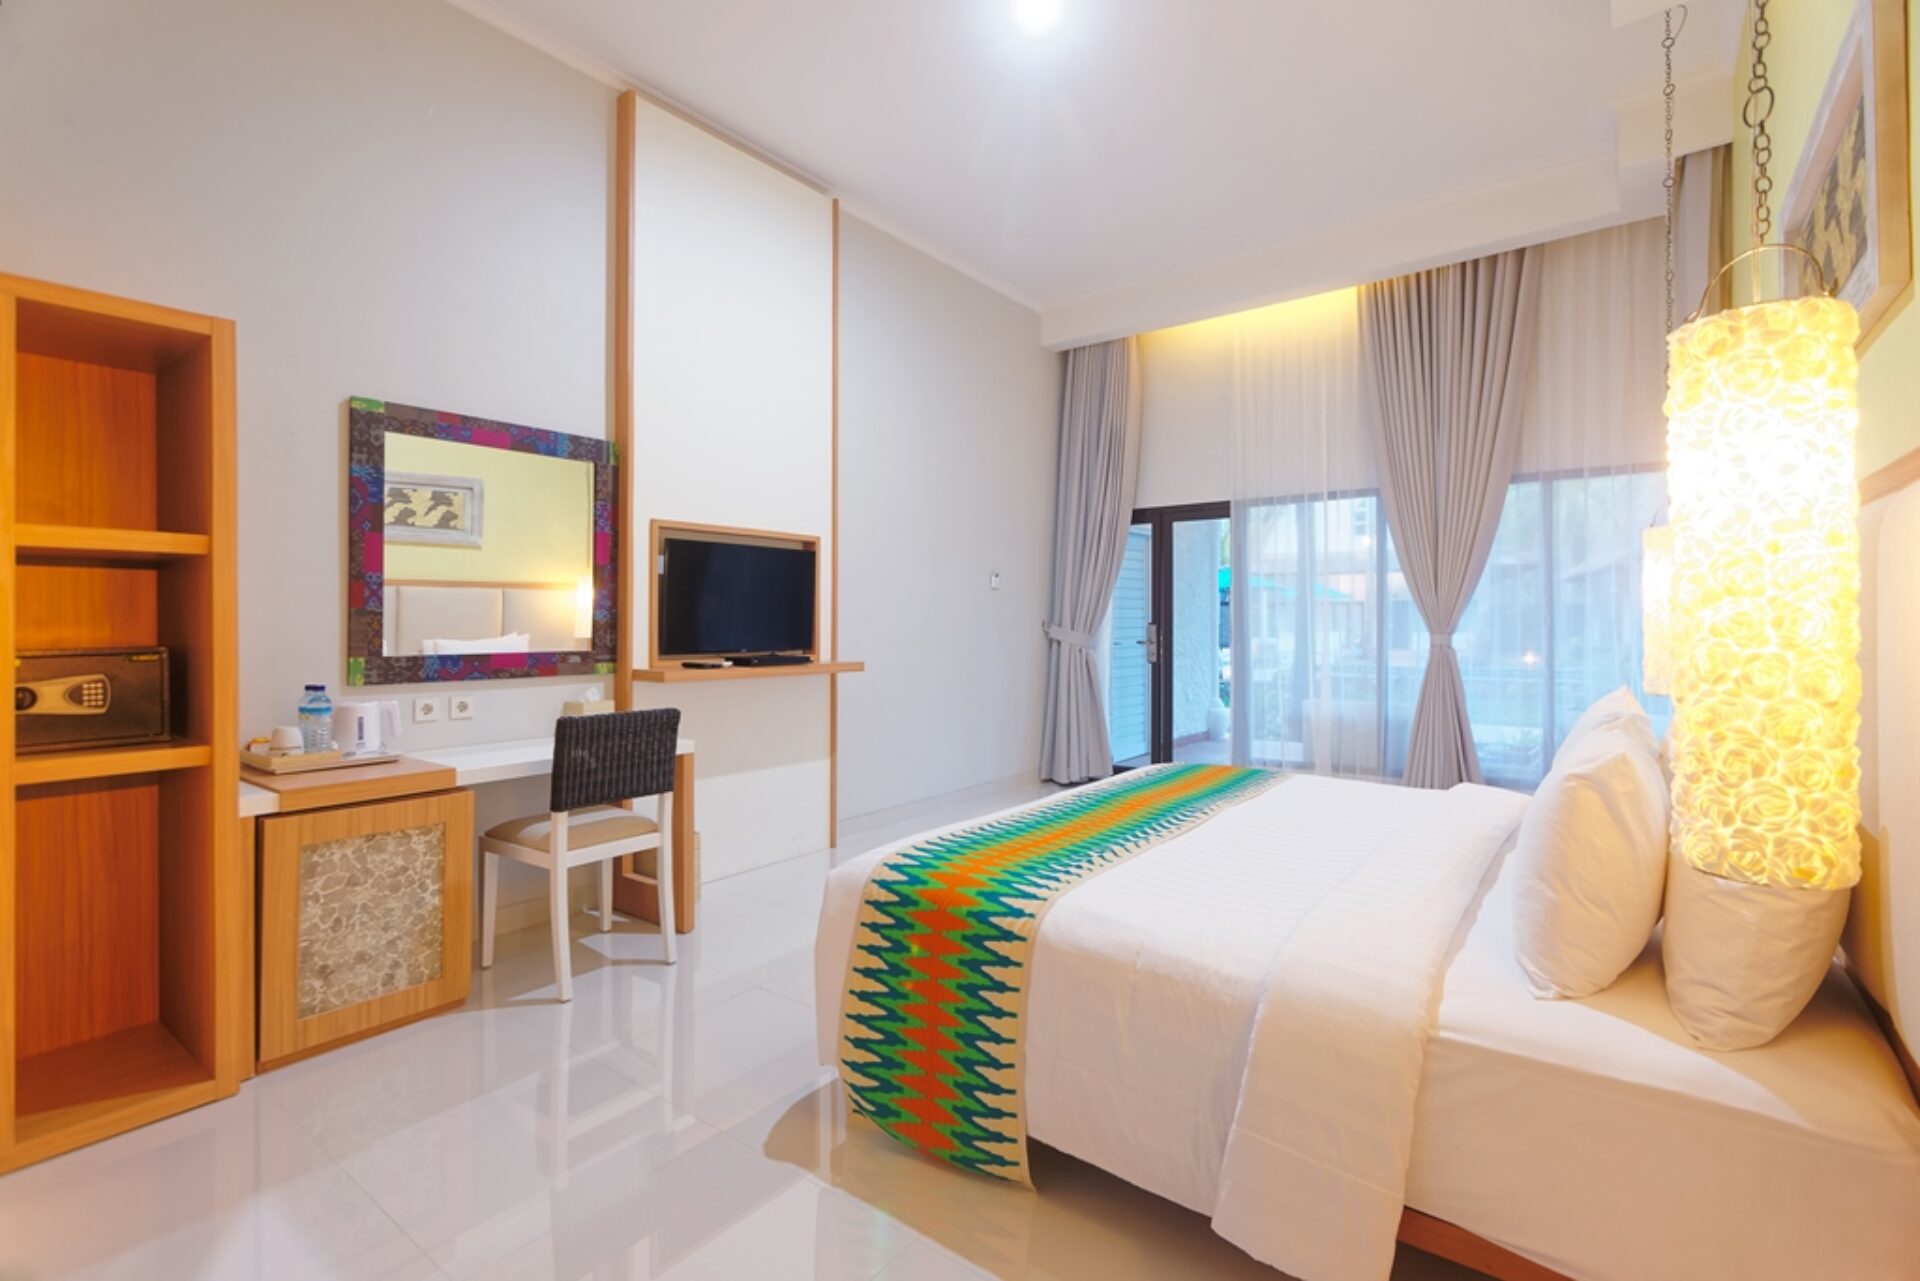 Oceano Resort Jambuluwuk Gili Trawangan Hotel Original Asia Rondreis Bali Lombok Vakantie Indonesie